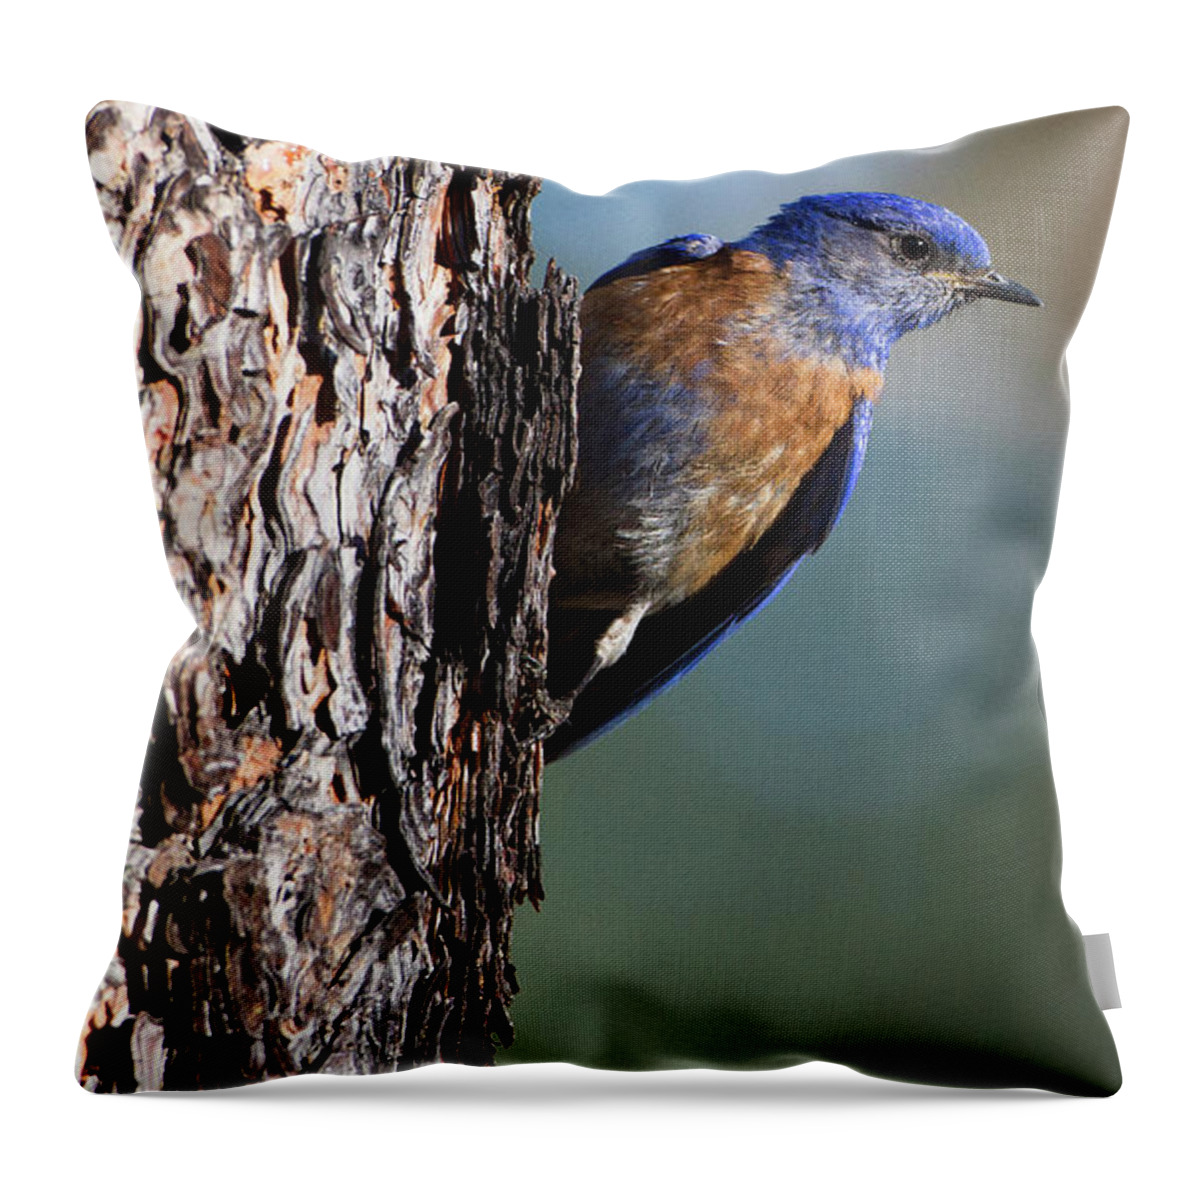 Western Bluebird Throw Pillow featuring the photograph Blue bird in a tree by Ruth Jolly